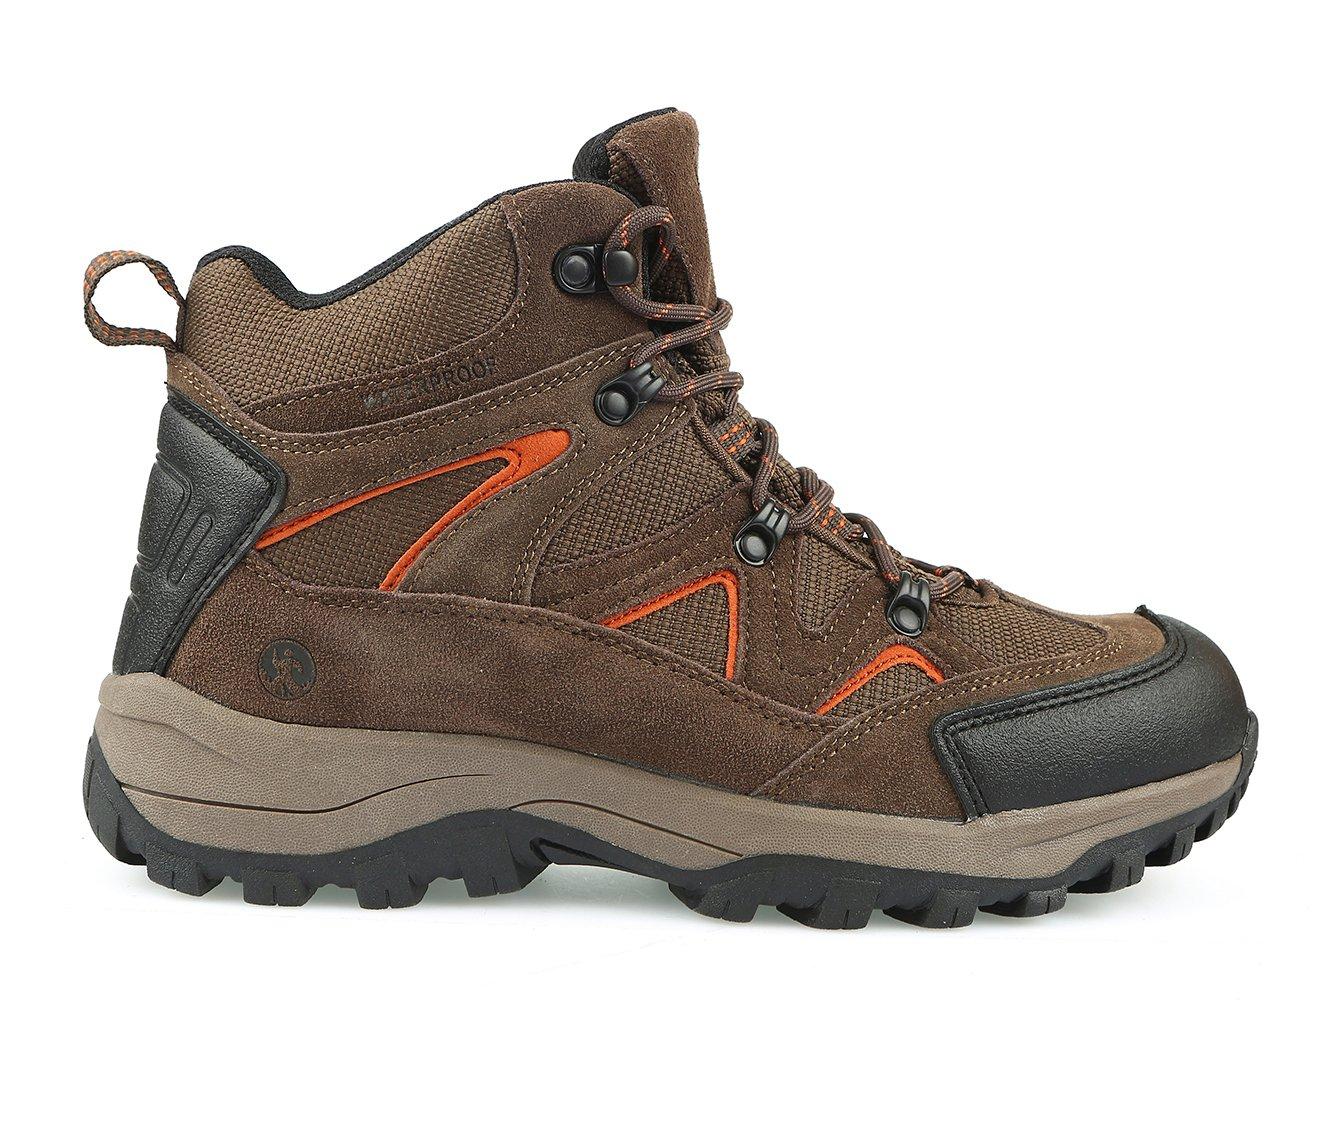 Men's Northside Snohomish Mid Hiking Boots